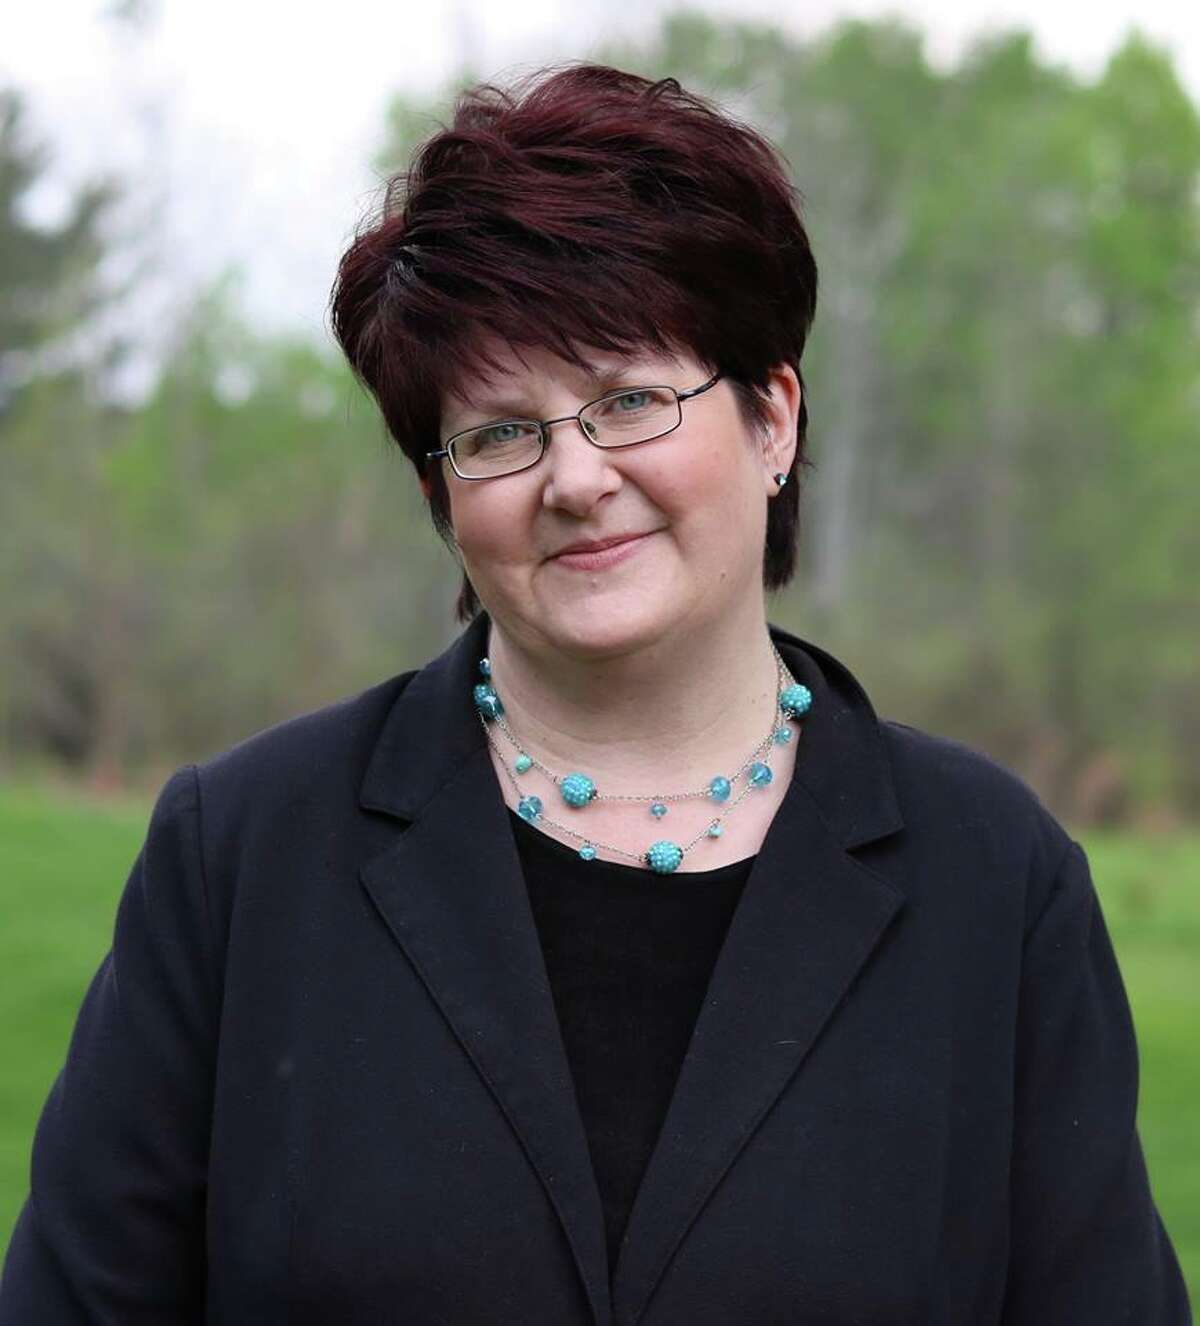 Republican Scotia mayoral candidate Loretta Rigney was defeated by Tom Gifford, a Democrat.